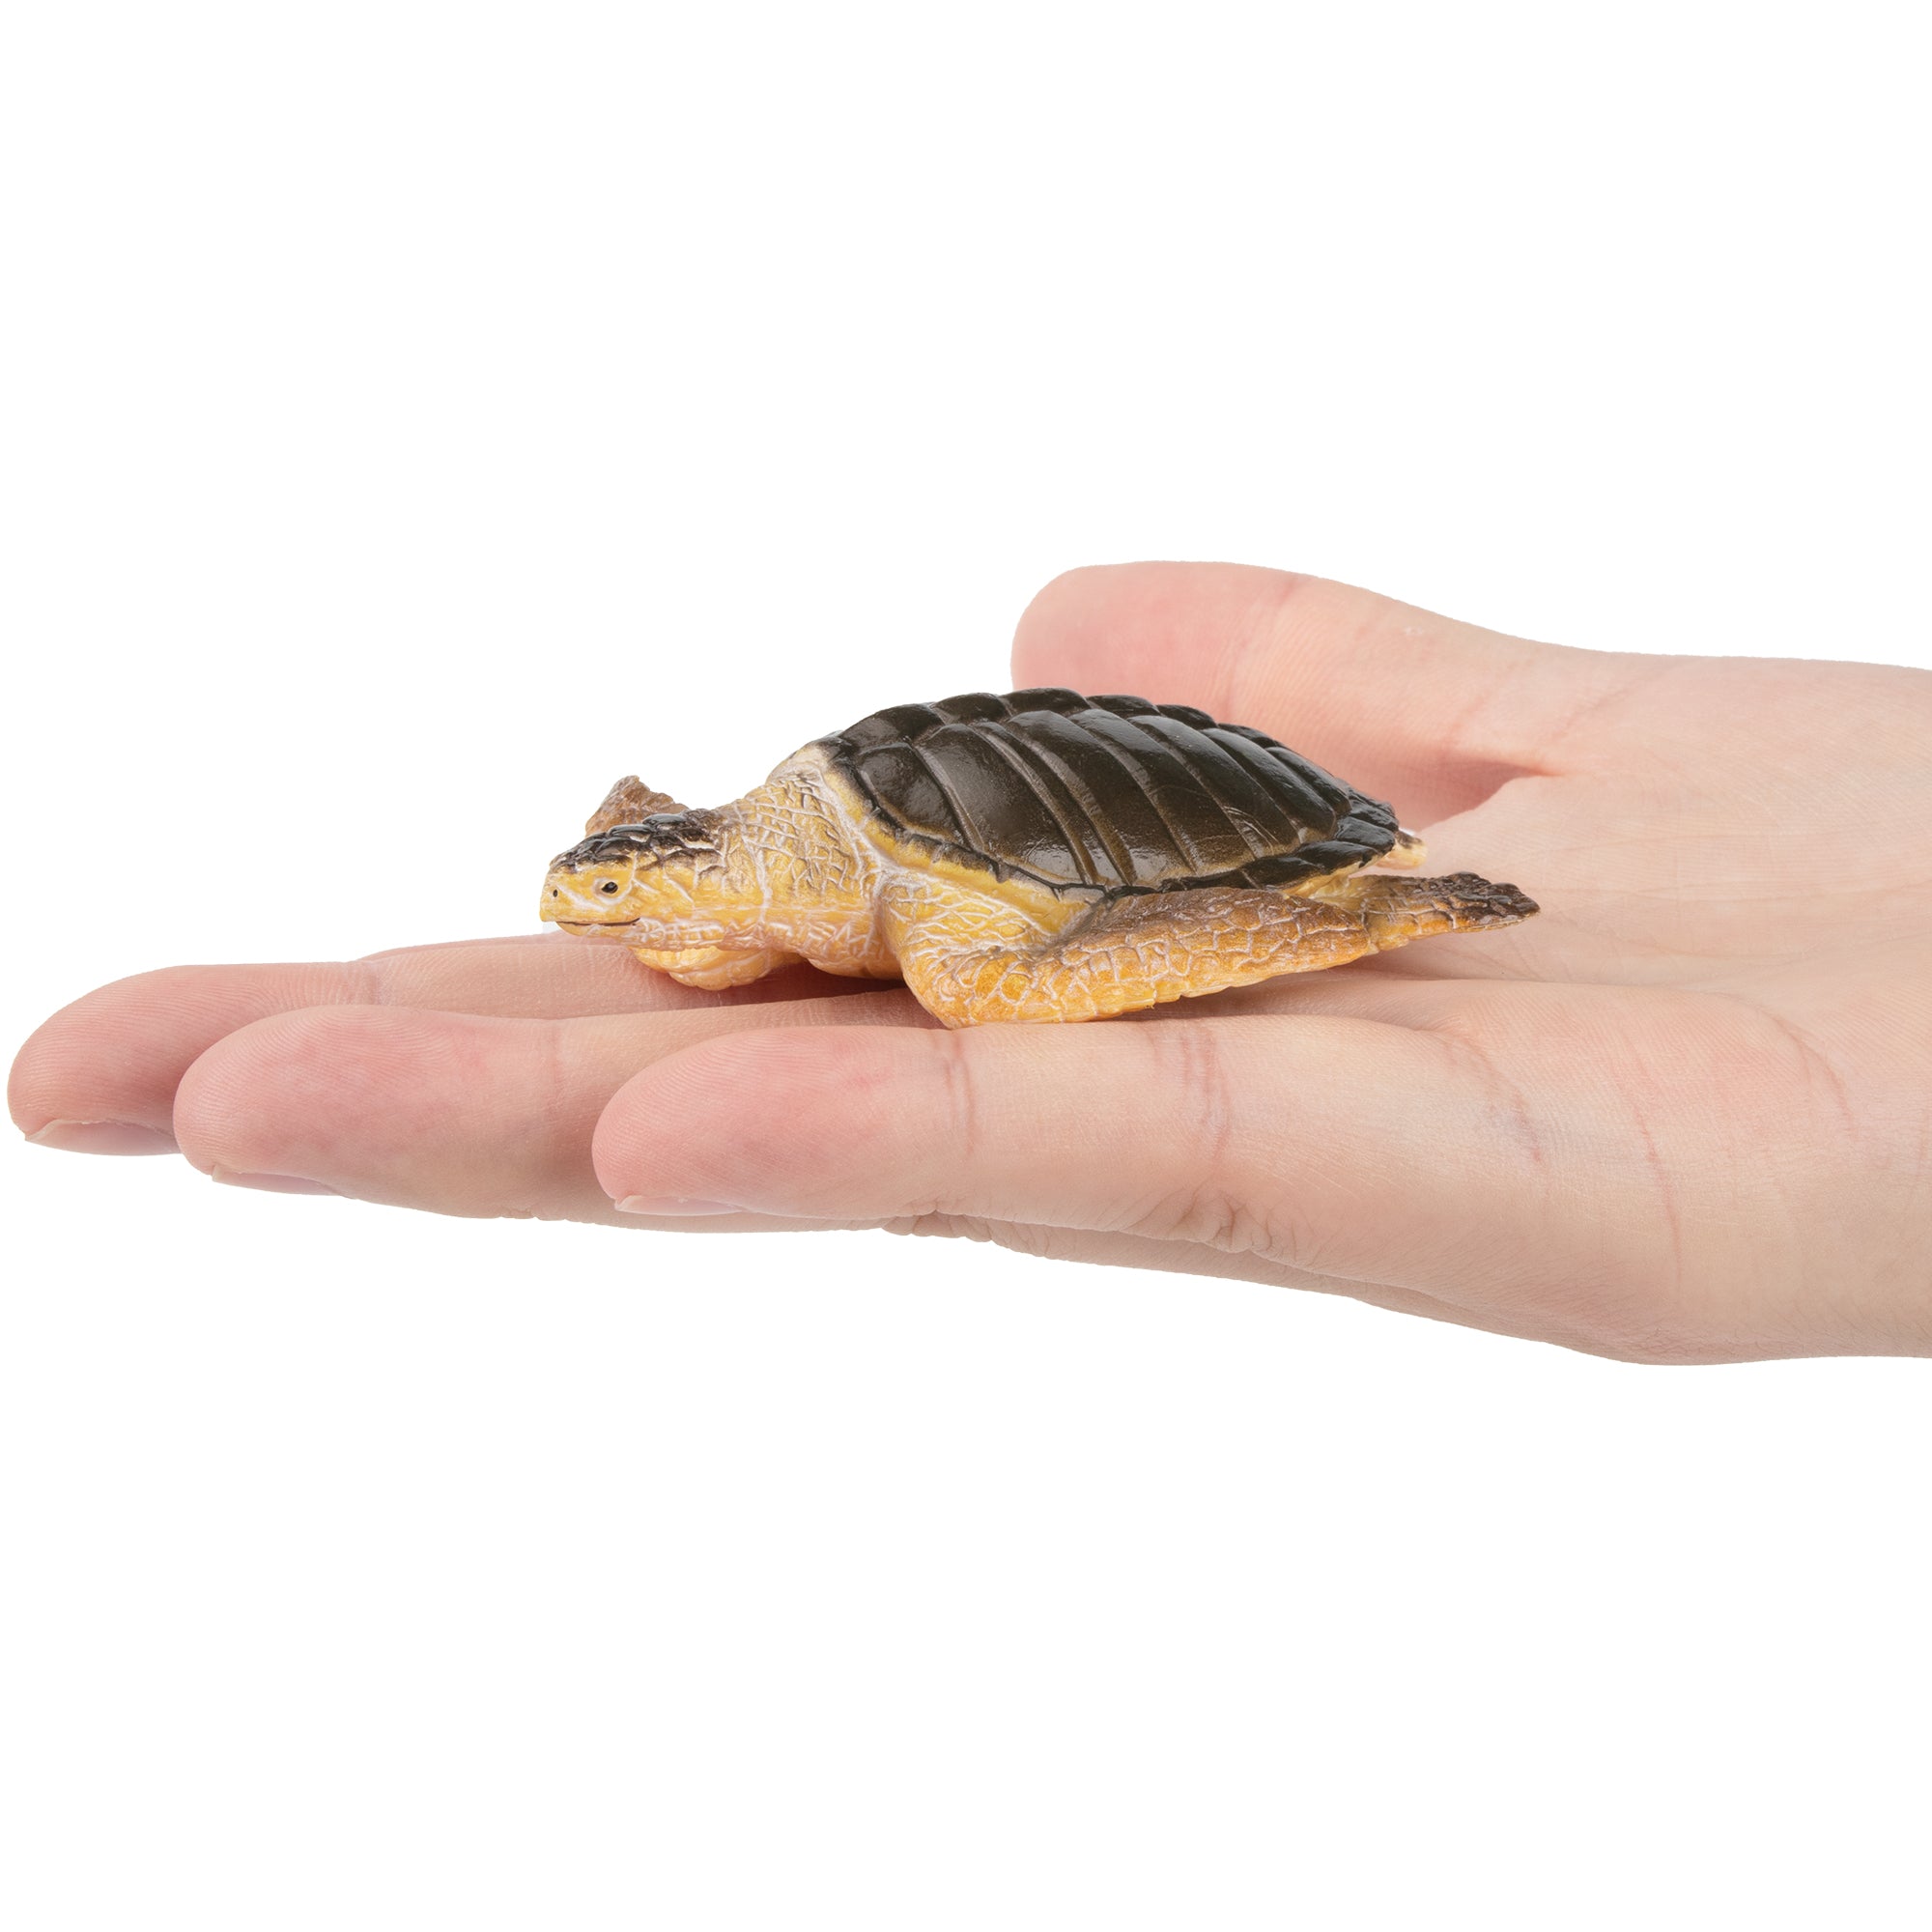 Toymany Kemp's Ridley Sea Turtle Figurine Toy-on hand